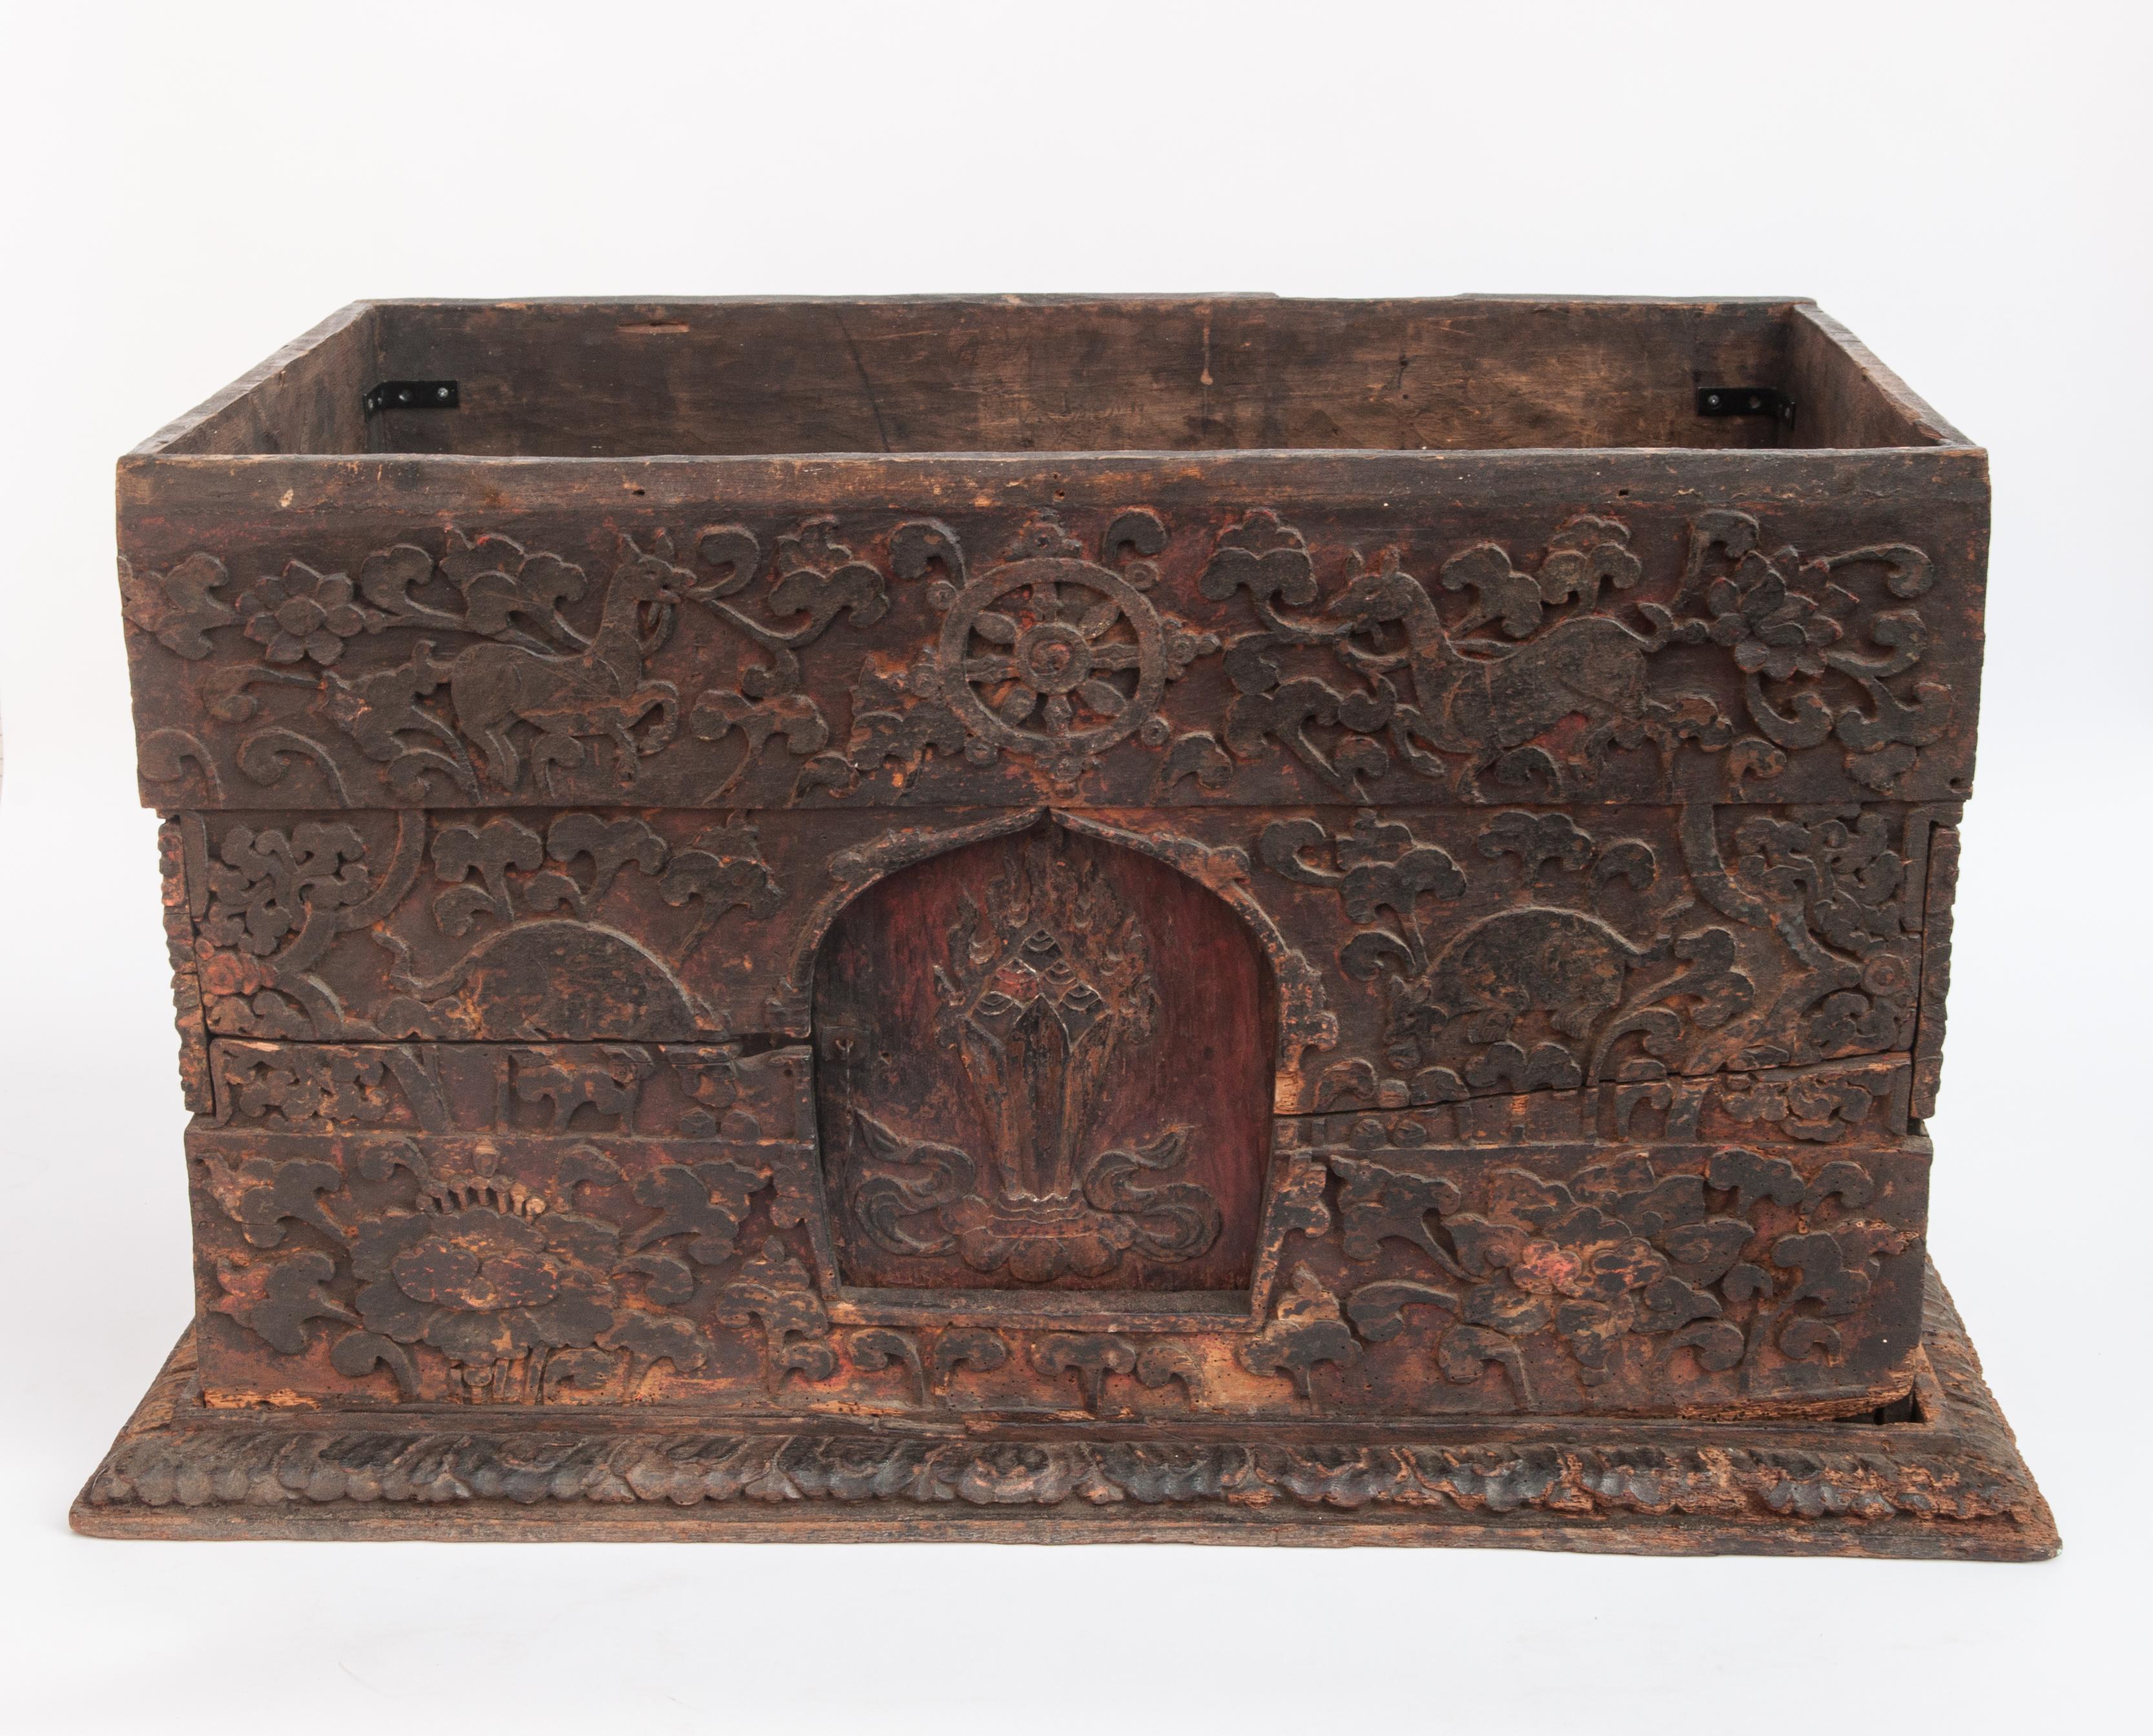 Antique Tibetan Style Religious Storage Box from Bhutan, 19th Century or Earlier 9